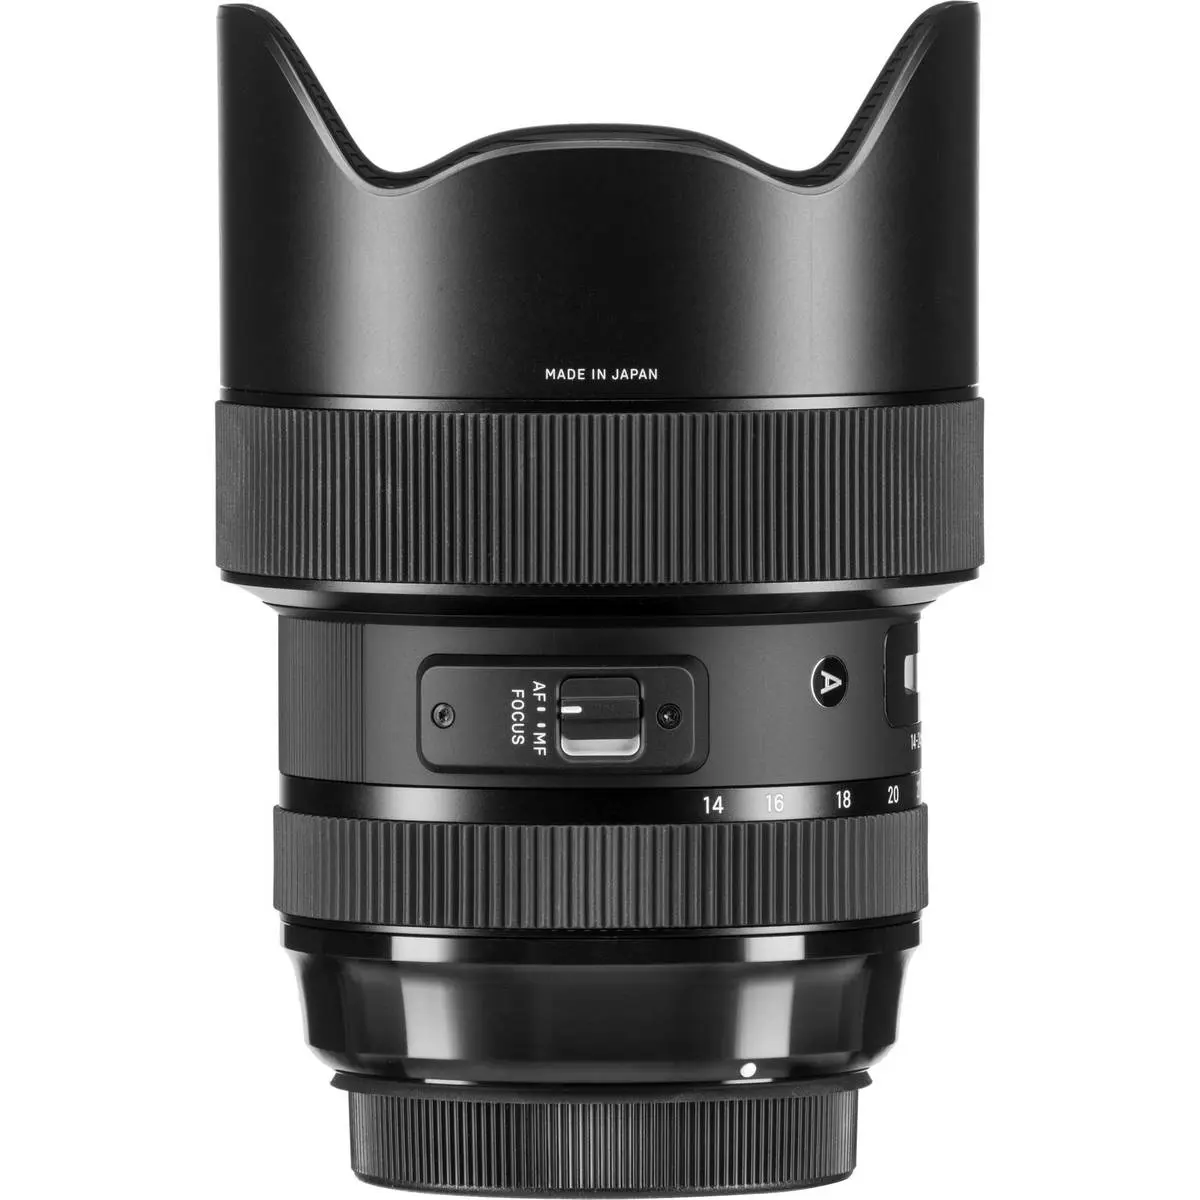 4. Sigma 14-24mm F2.8 DG HSM | Art (Nikon) Lens